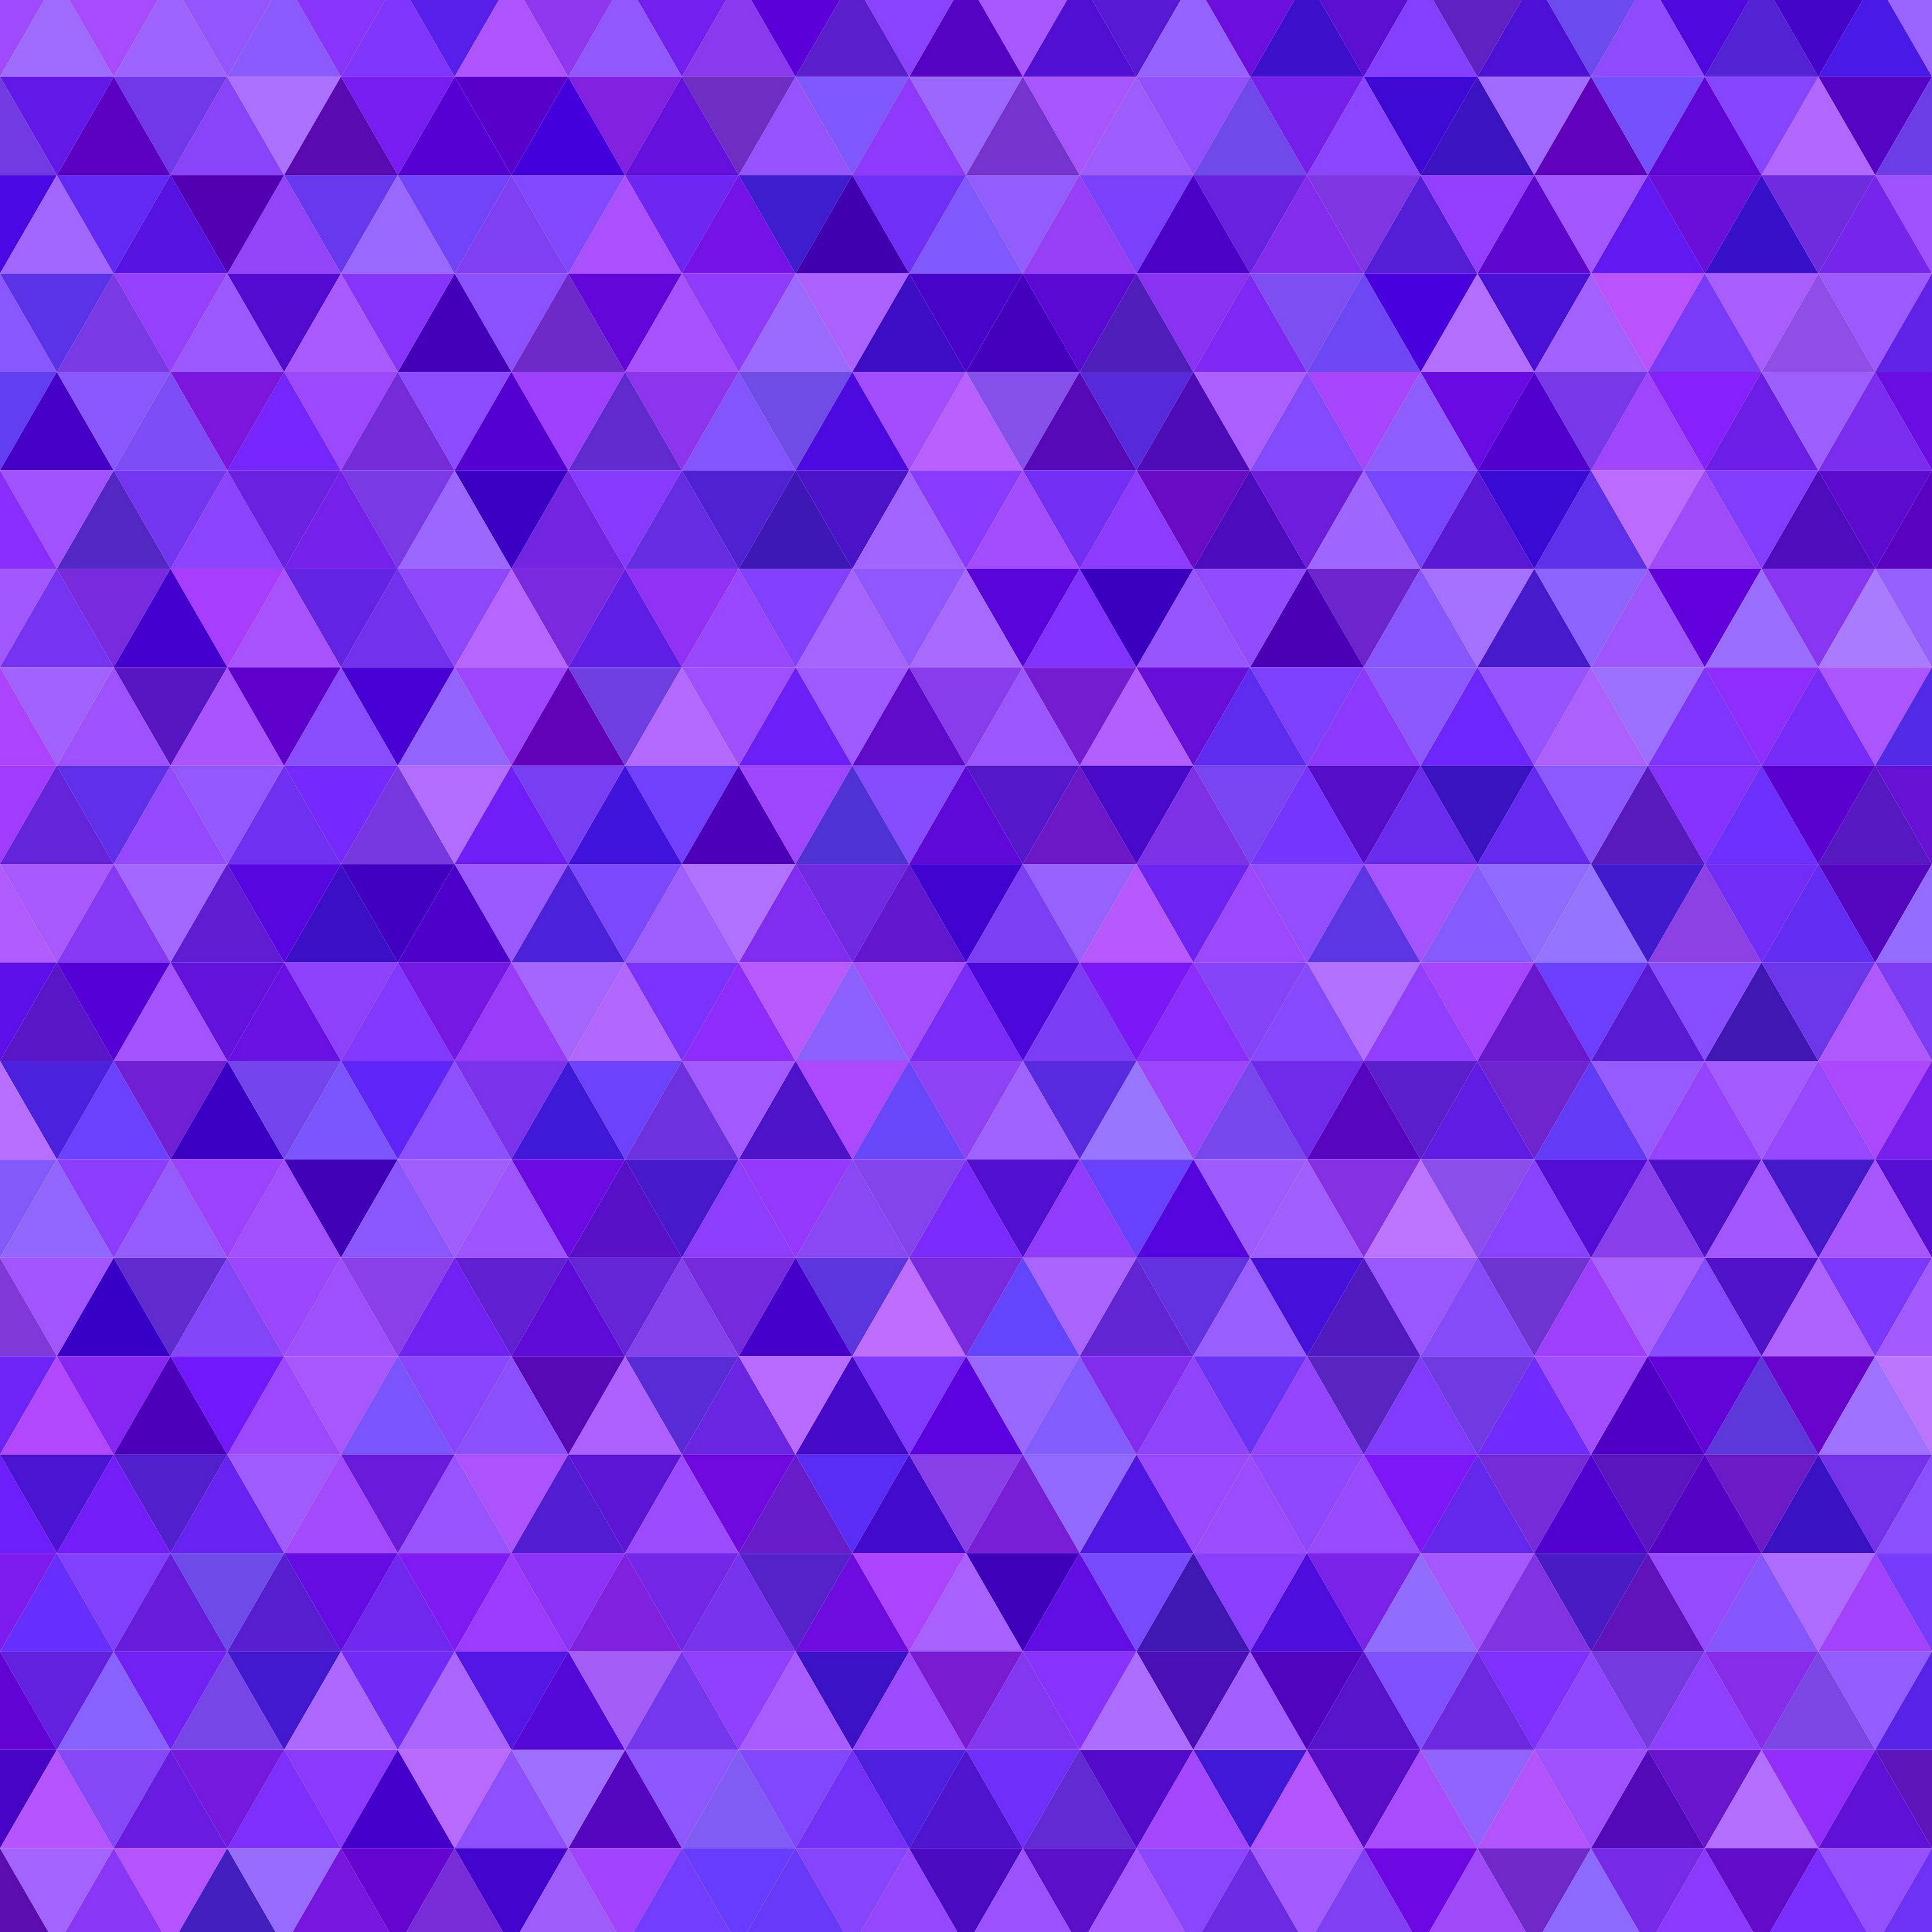 Download wallpaper 2248x2248 gradient purple blue abstract ipad air ipad  air 2 ipad 3 ipad 4 ipad mini 2 ipad mini 3 2248x2248 hd background  14955